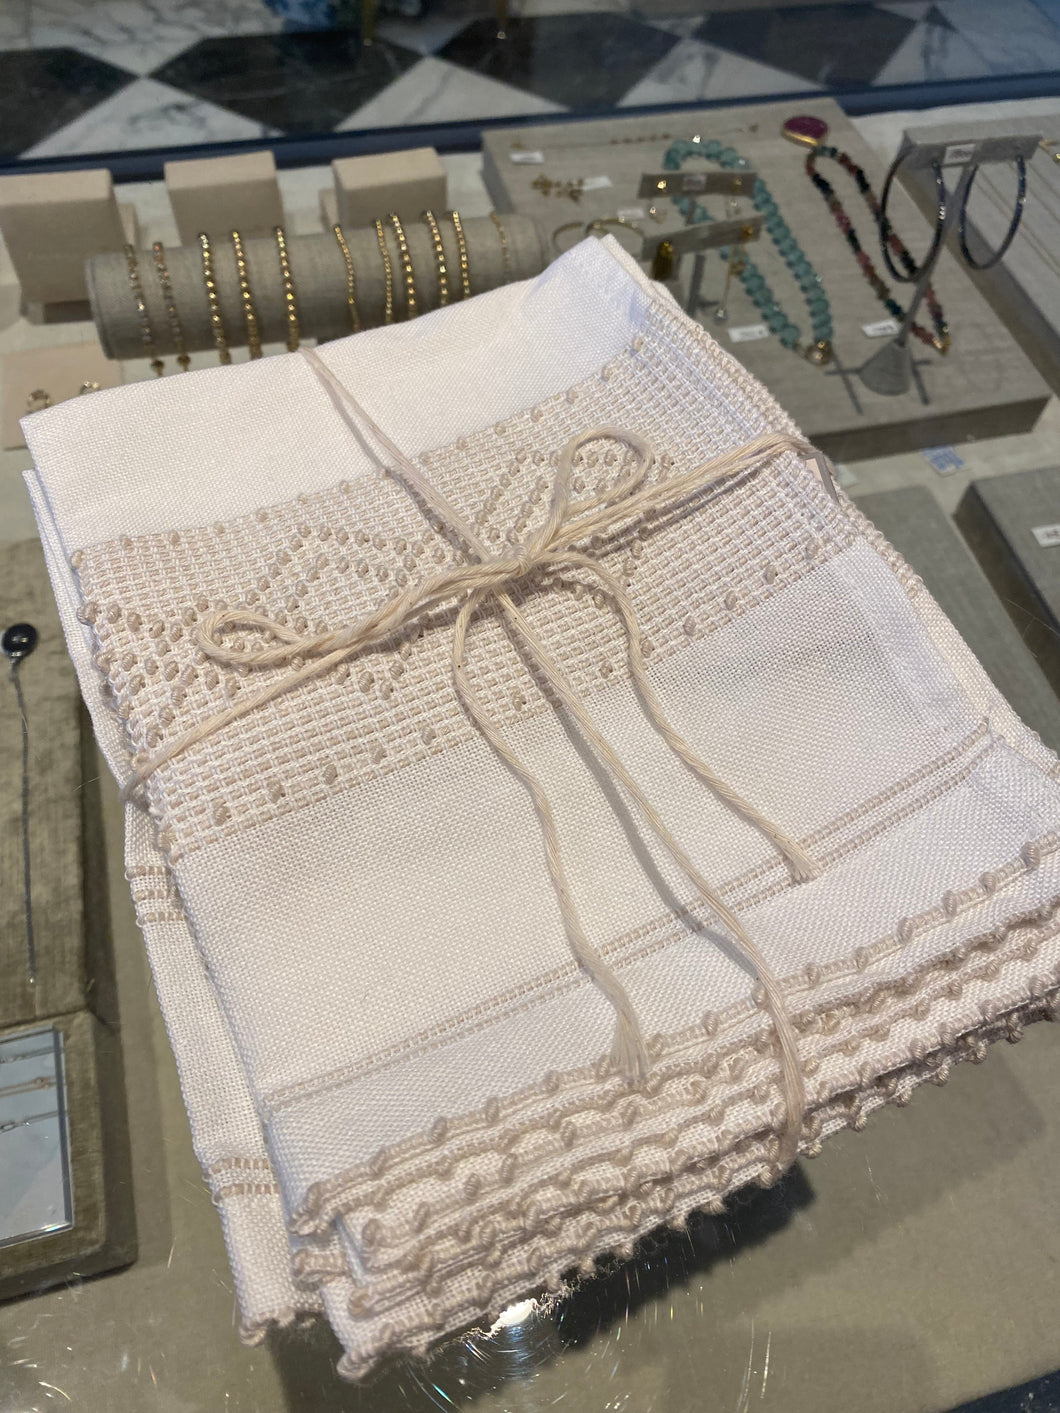 Small Guest Towel with Alberghetto Piccolo motif